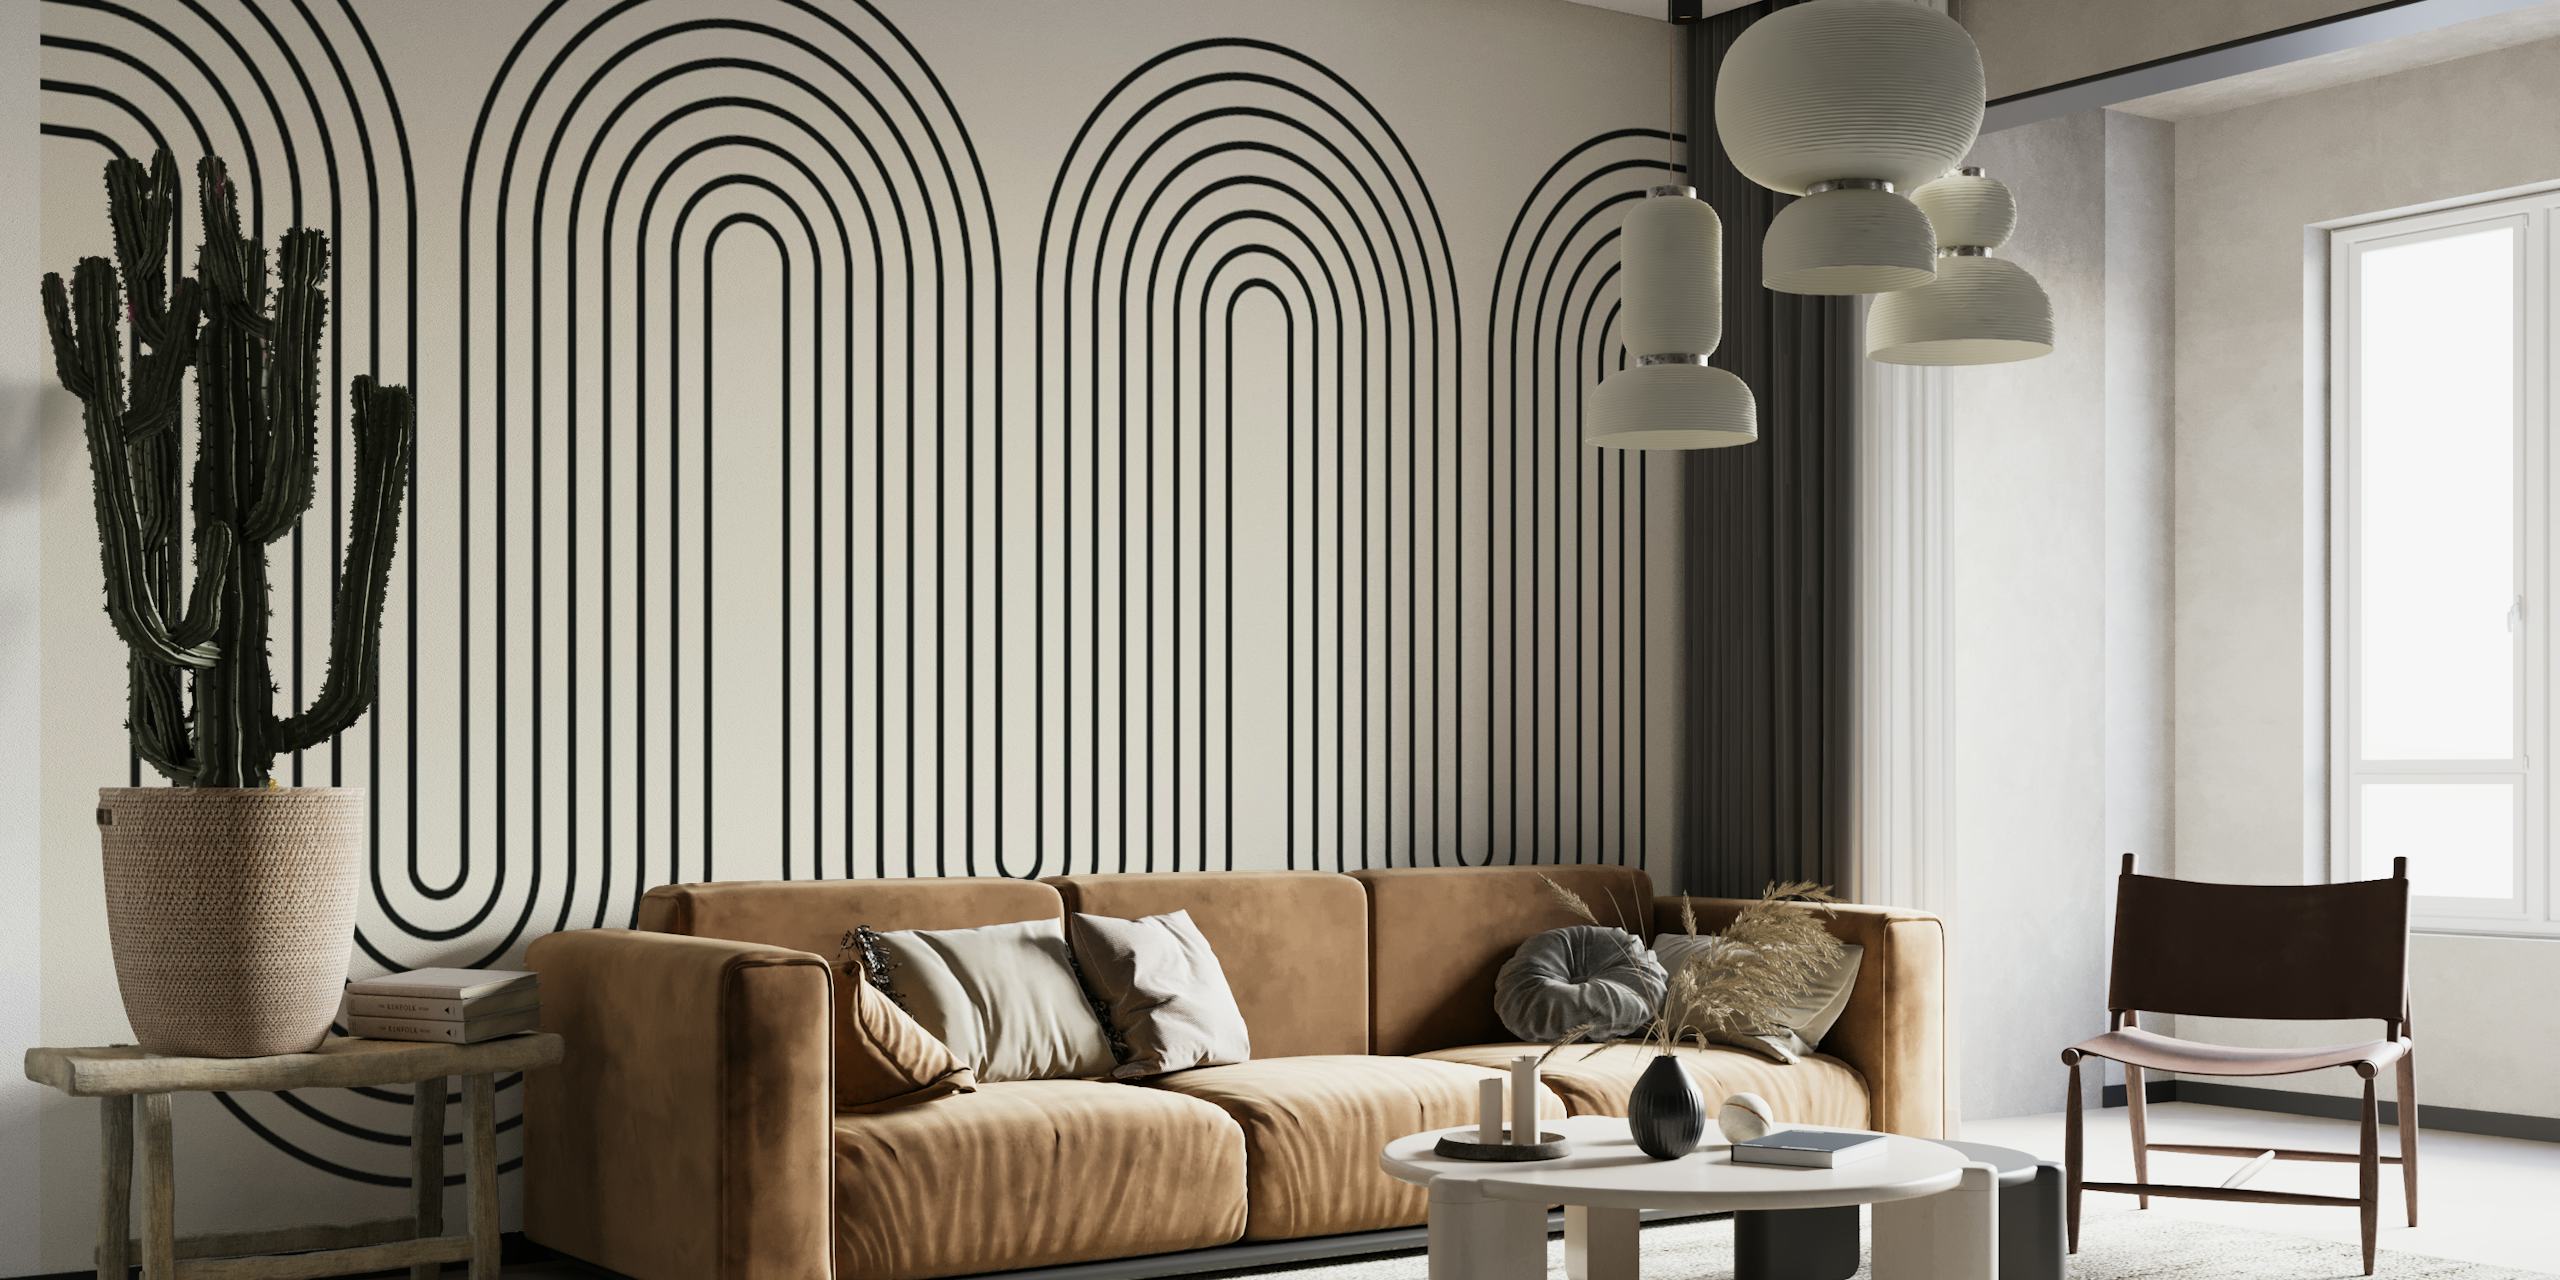 Modern minimalist wavy line wall mural in grayscale tones